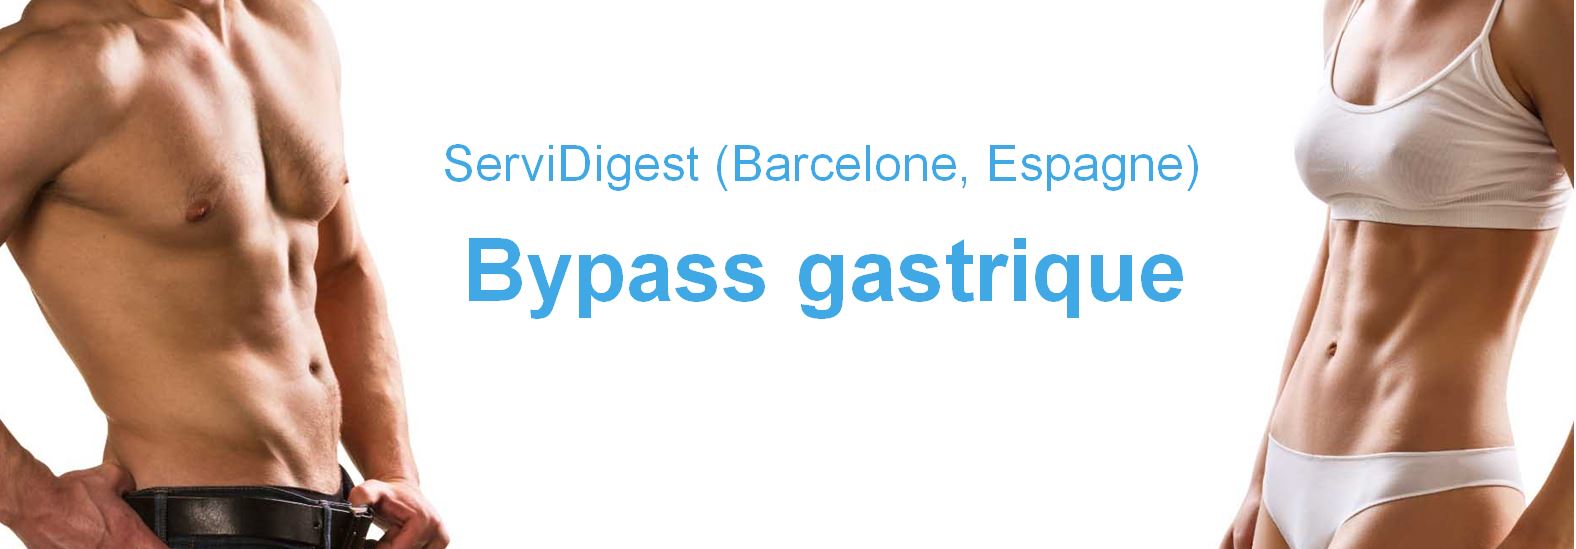 Bypass gastrique